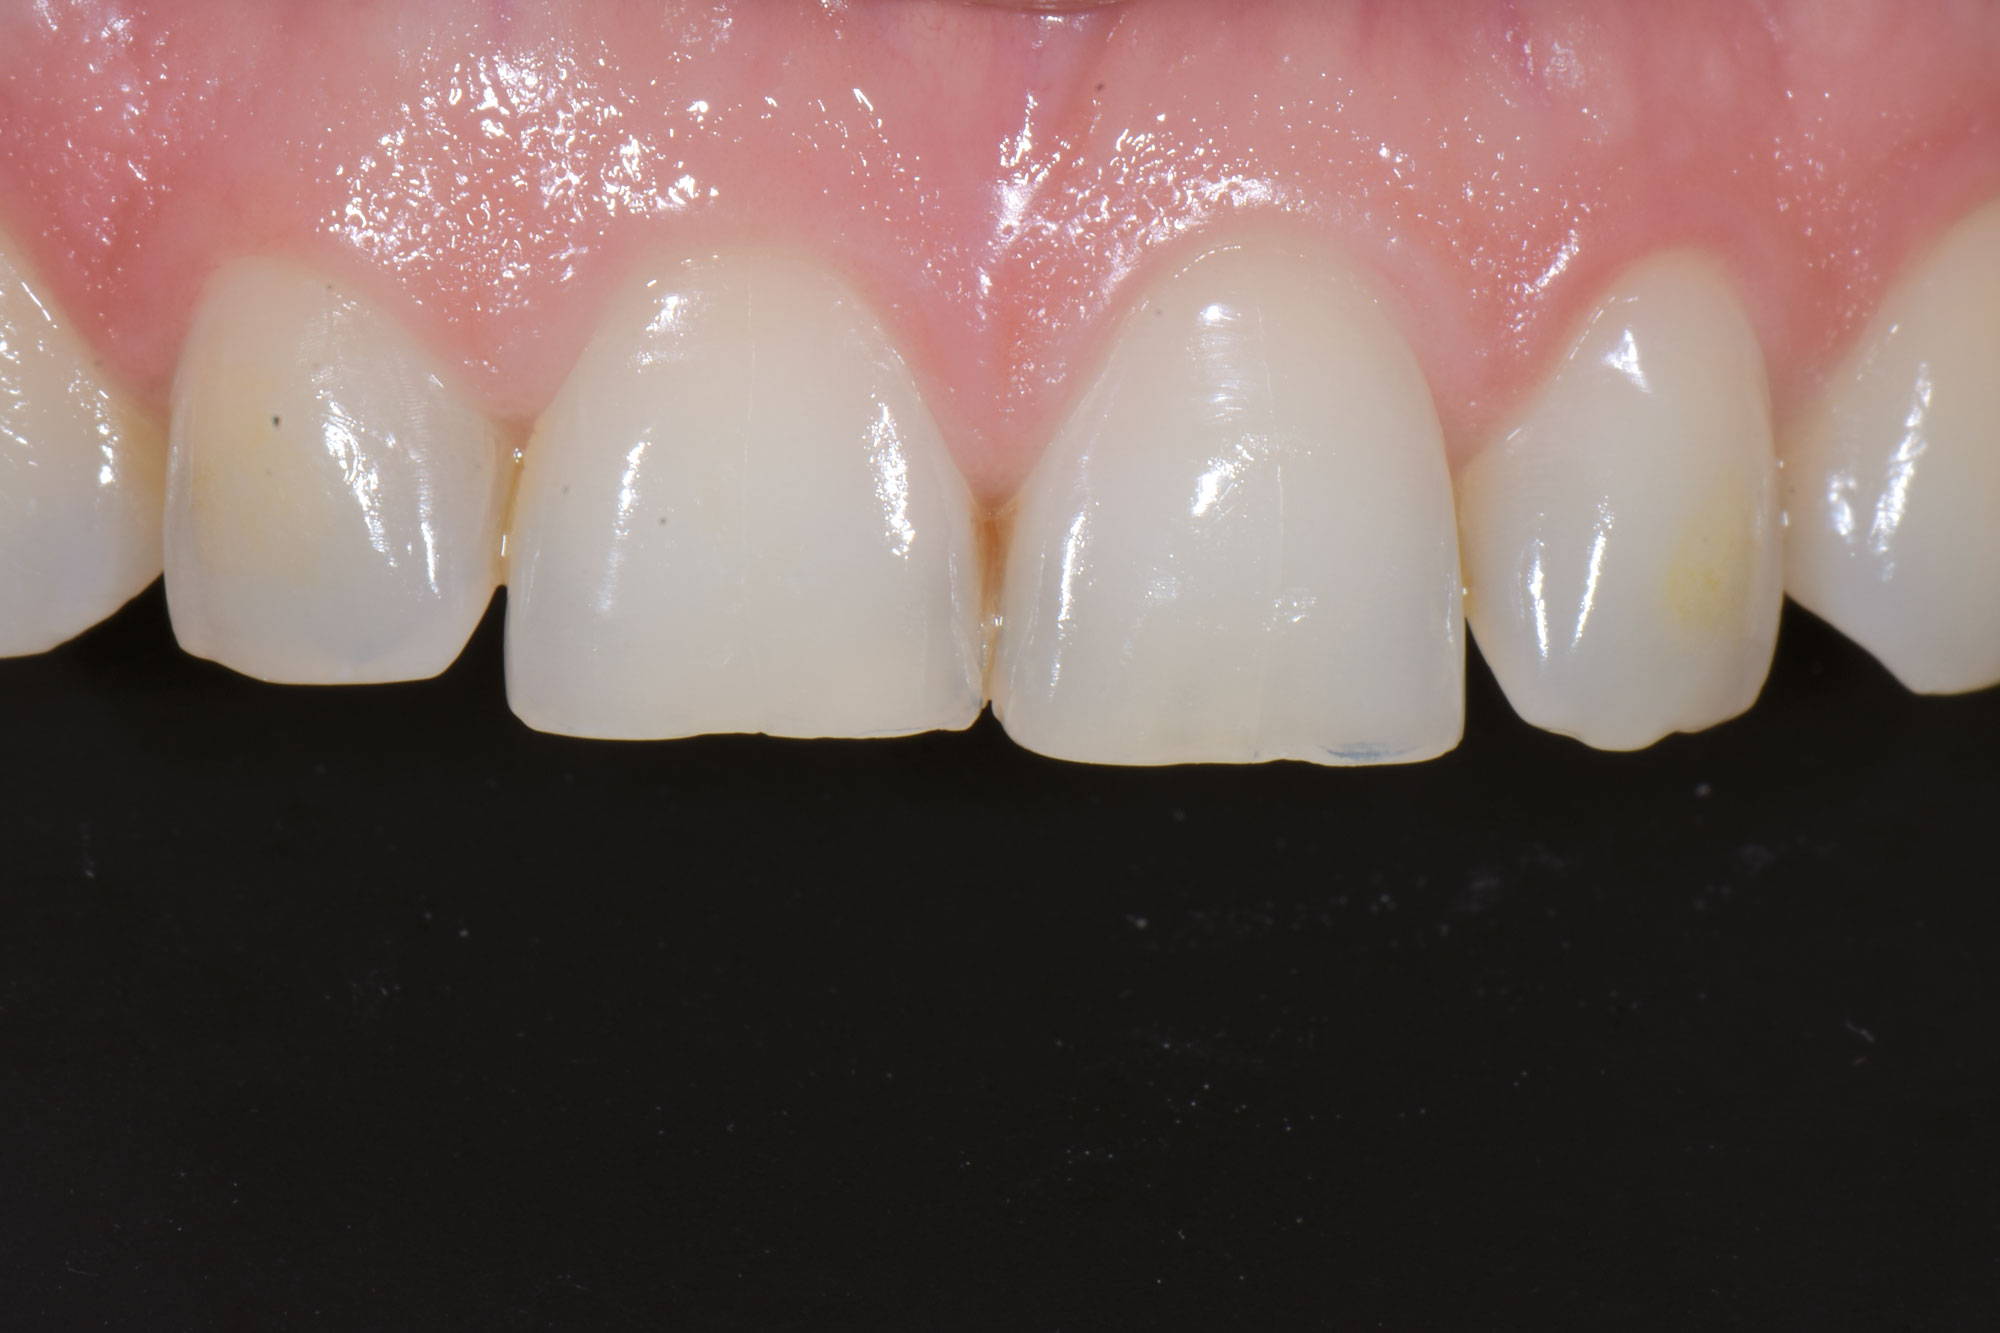 upper teeth before restoration in black background